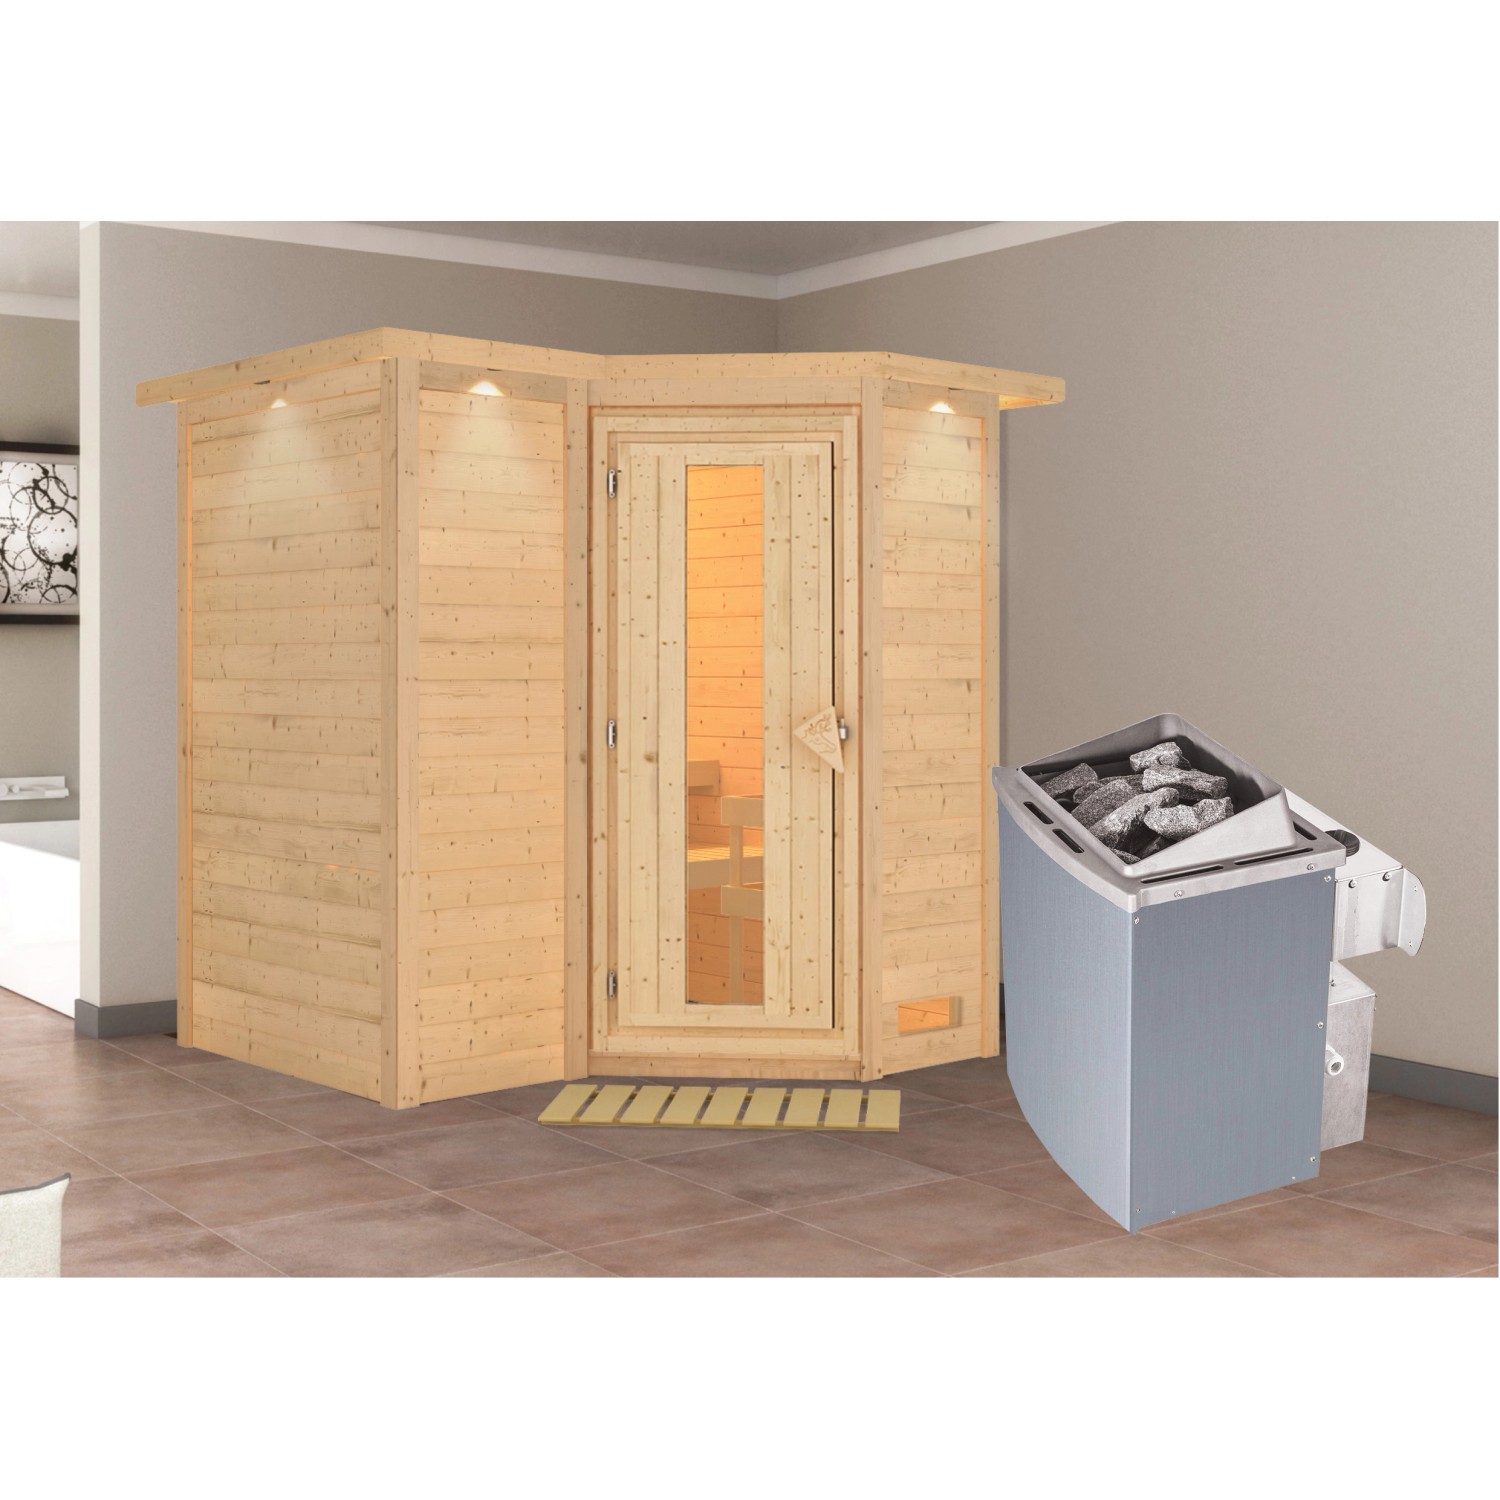 Woodfeeling Sauna Steena 1 inkl. Ofen 9 kW integr. Strg., Dachkranz, Energi günstig online kaufen